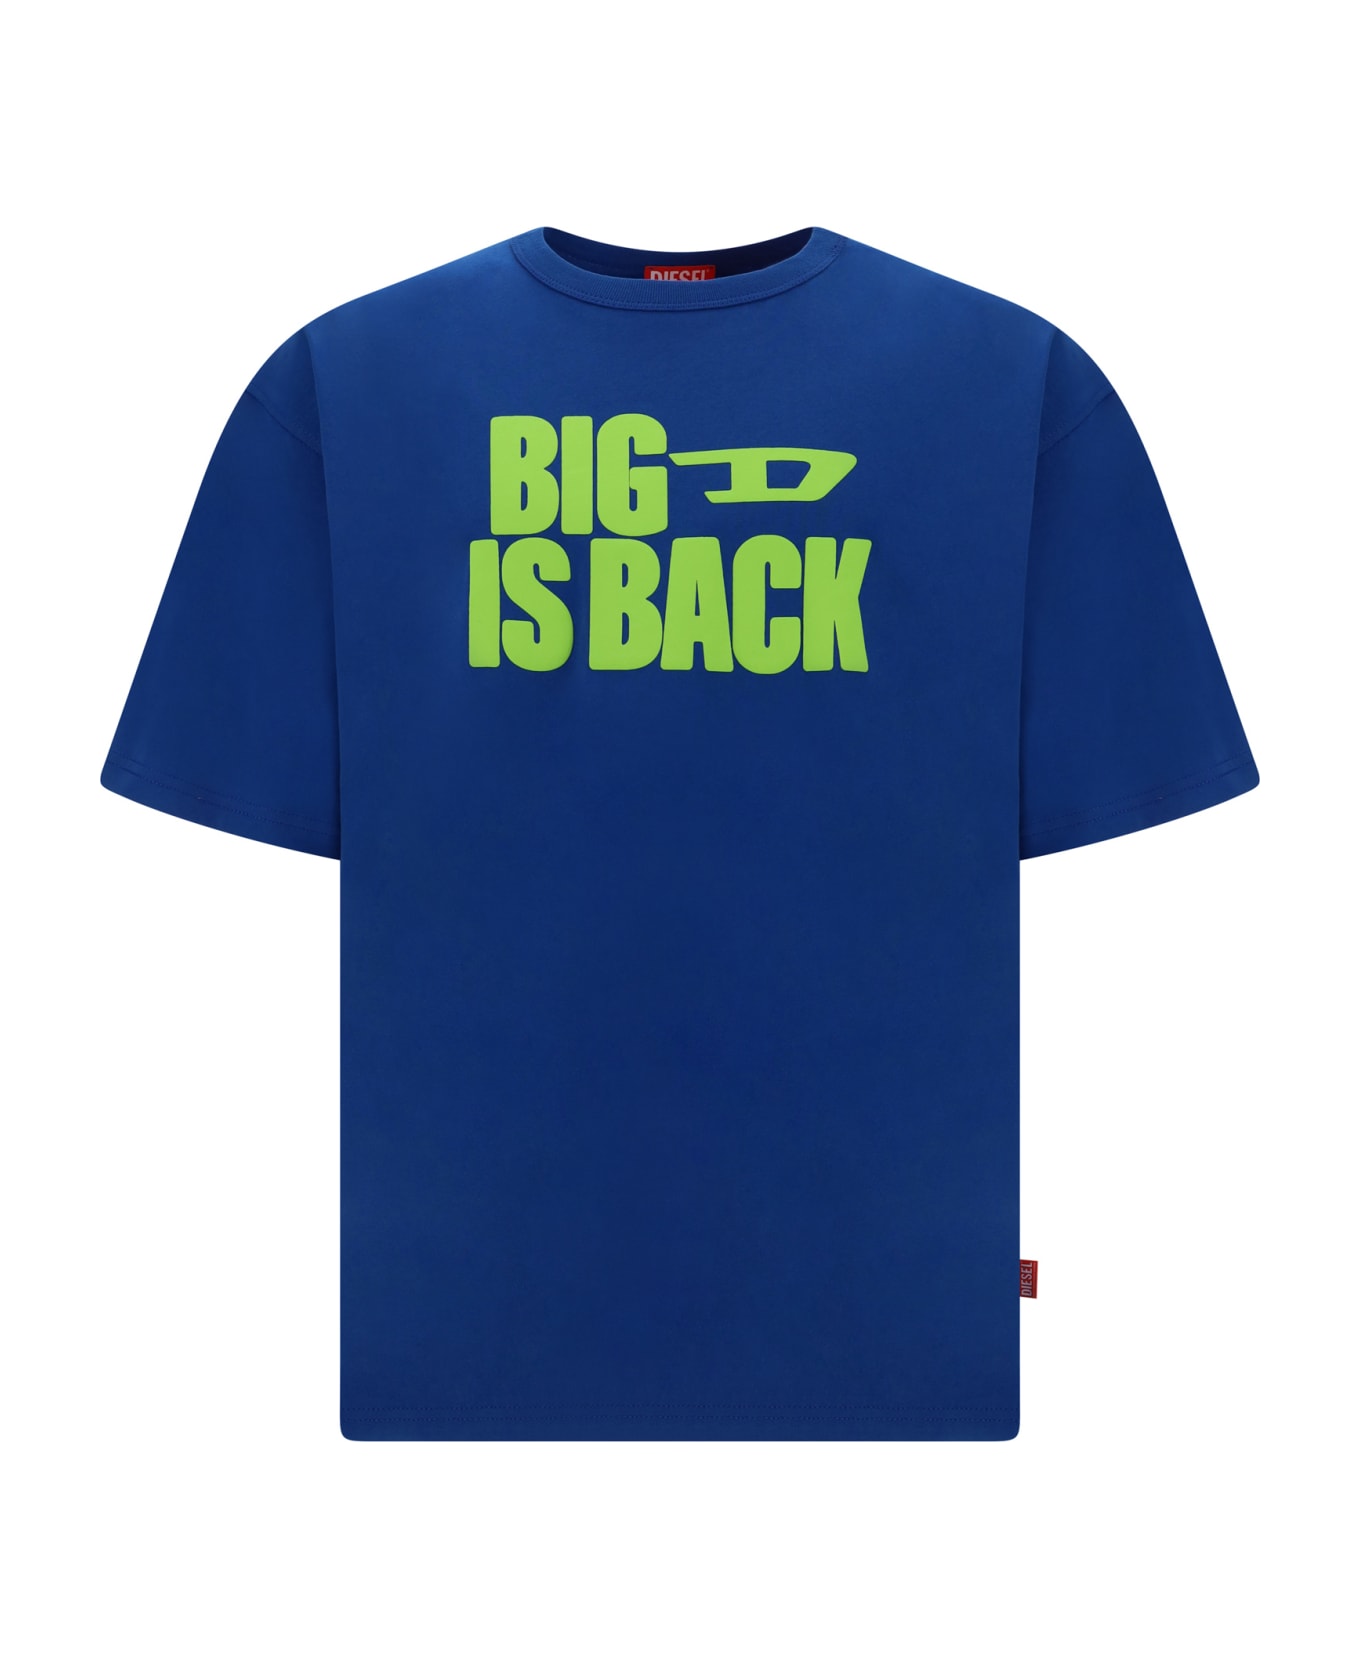 Diesel T-shirt - 428 - Classic Blue シャツ